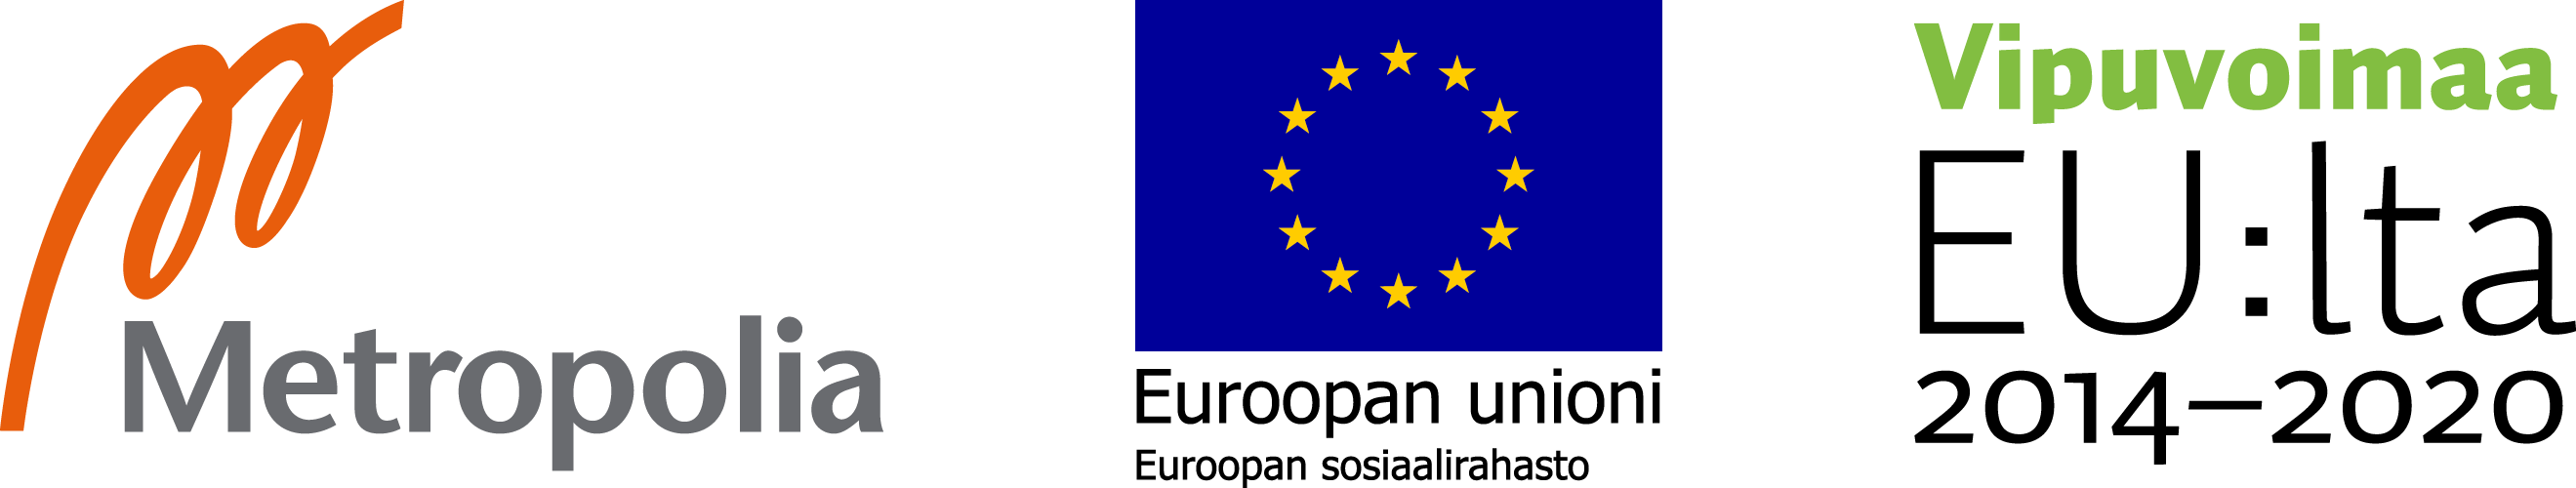 Metropolia, EU ja Vipuvoimaa EU:lta -logot